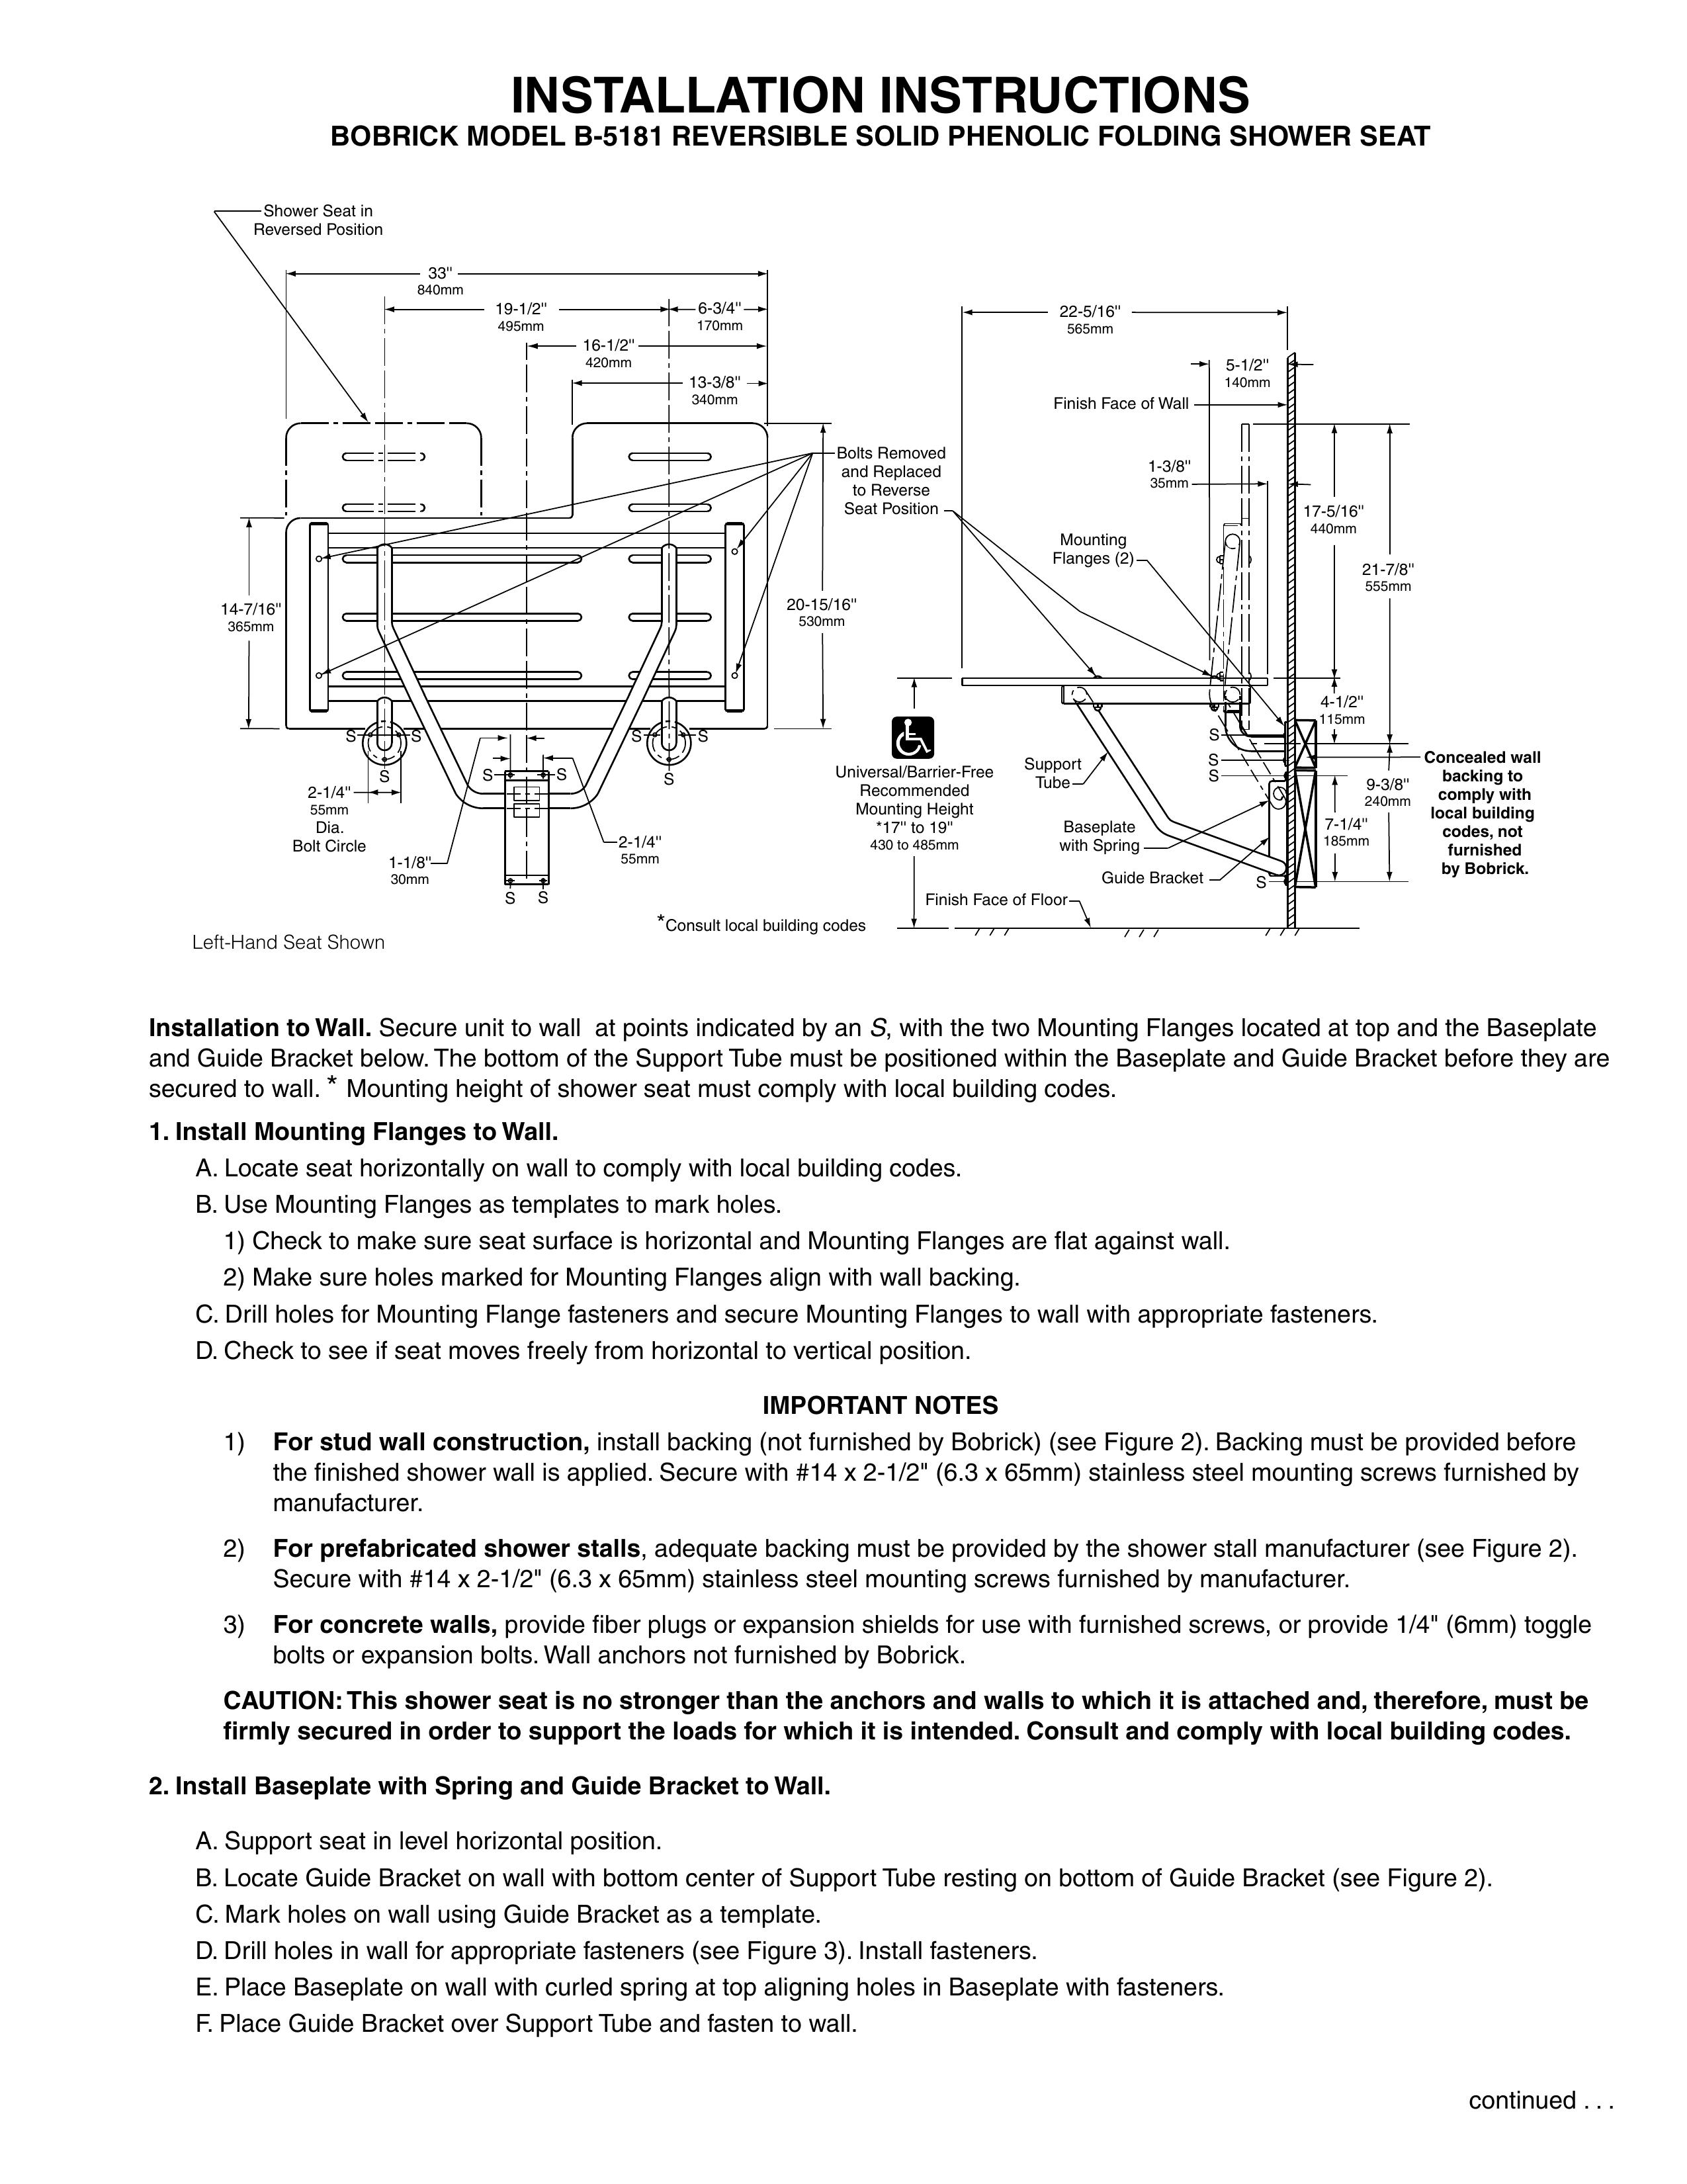 Bobrick B-5181 Bathroom Aids User Manual (Page 1)